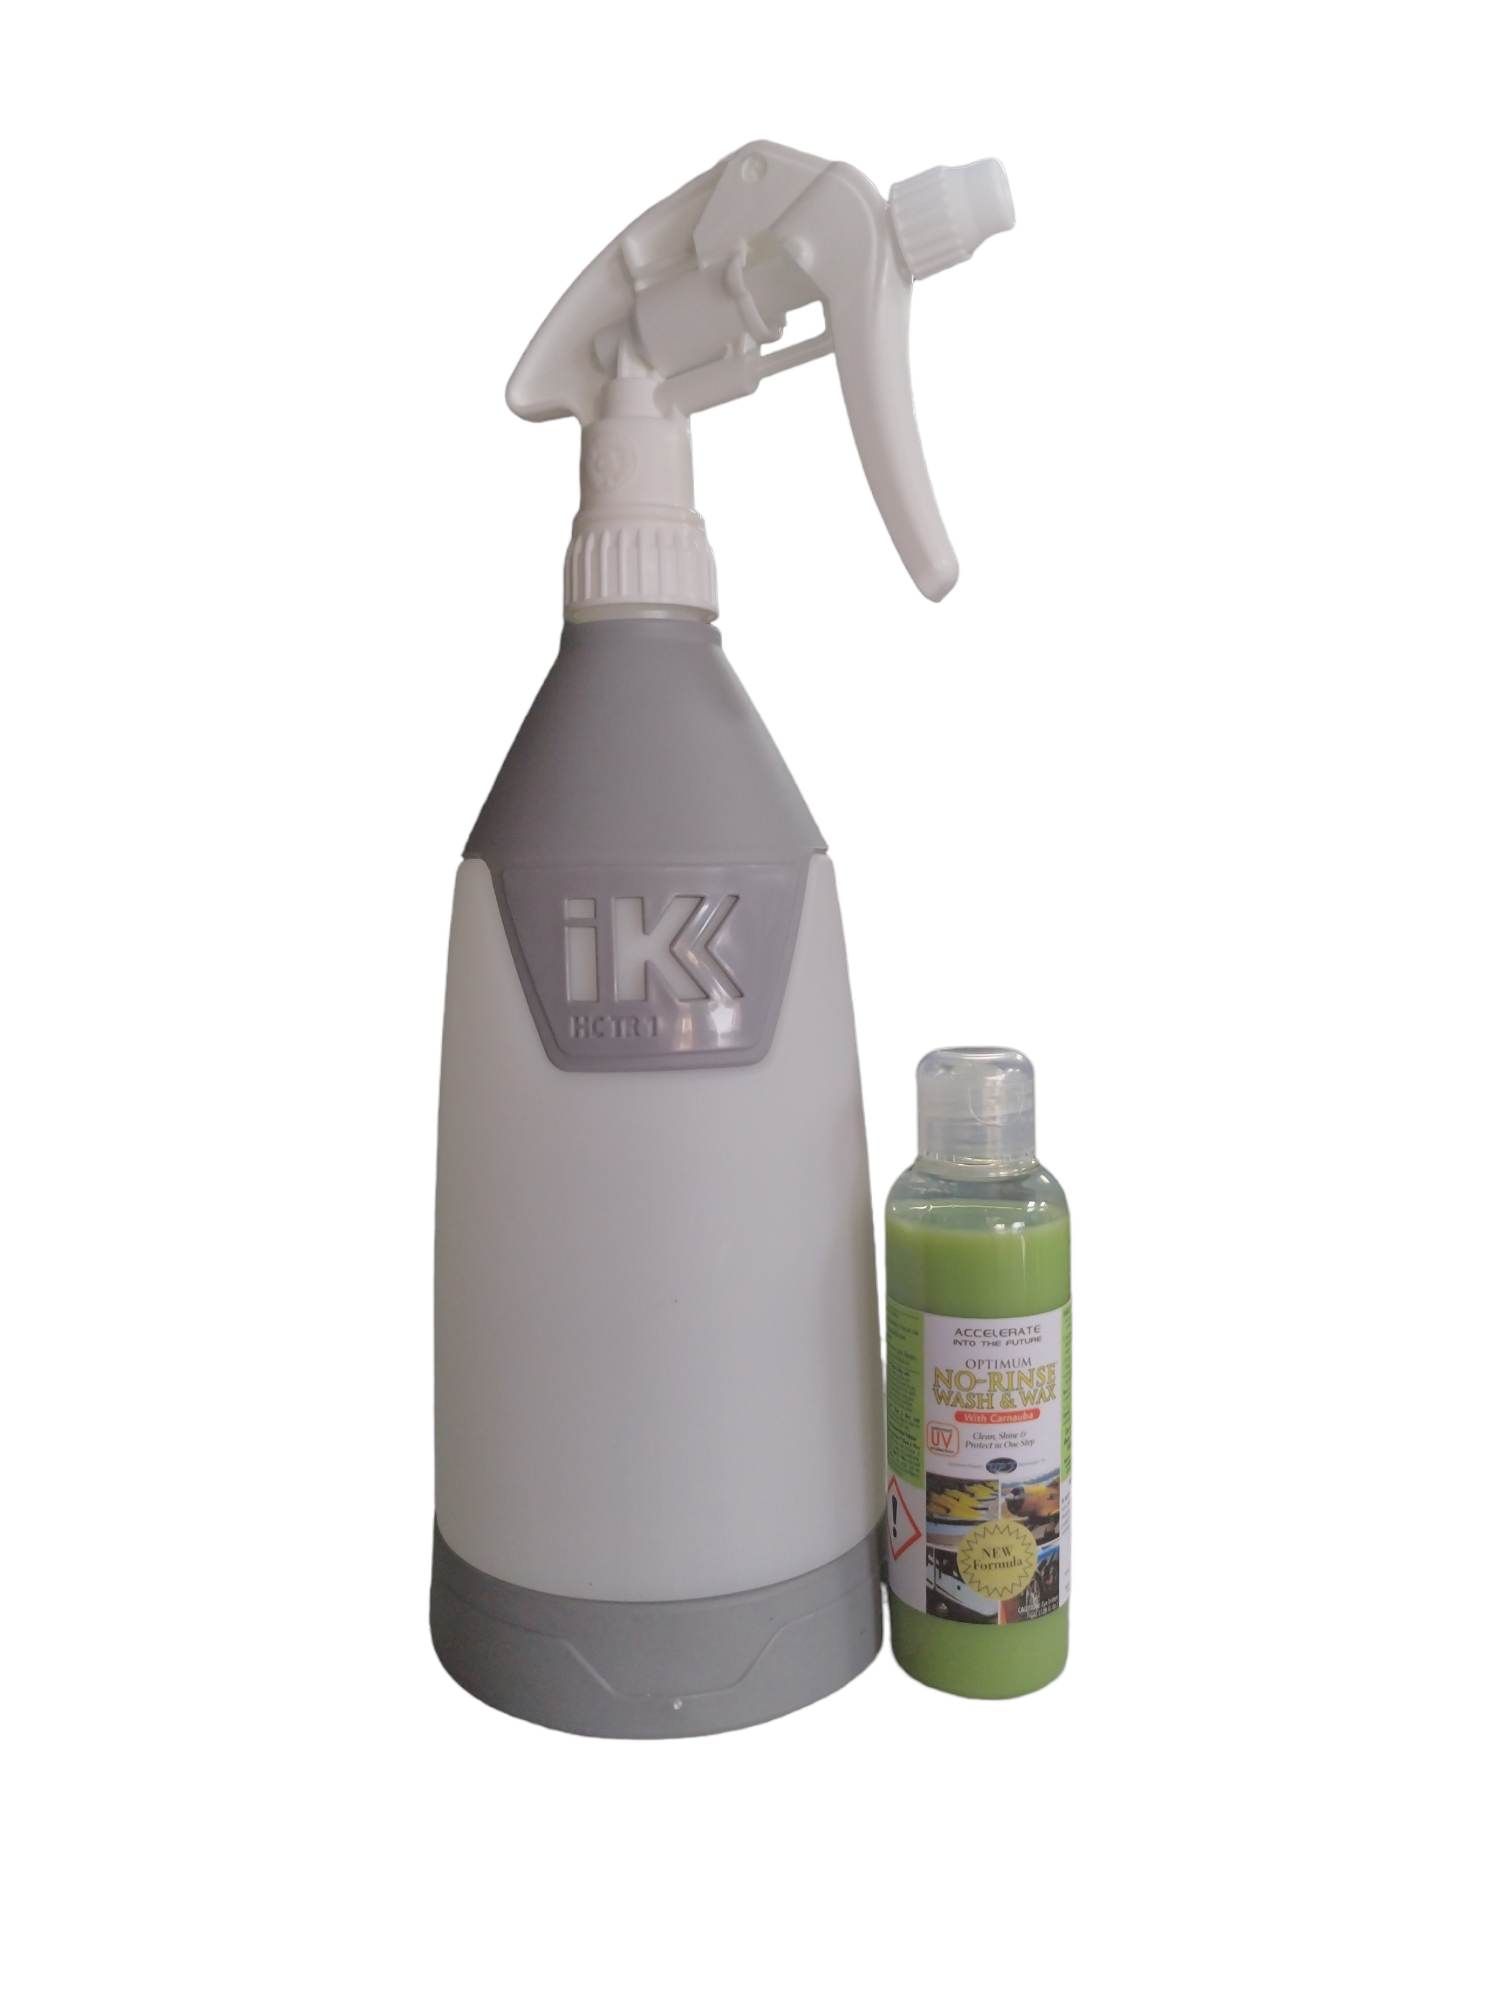 IK HC TR 1 professional sprayer